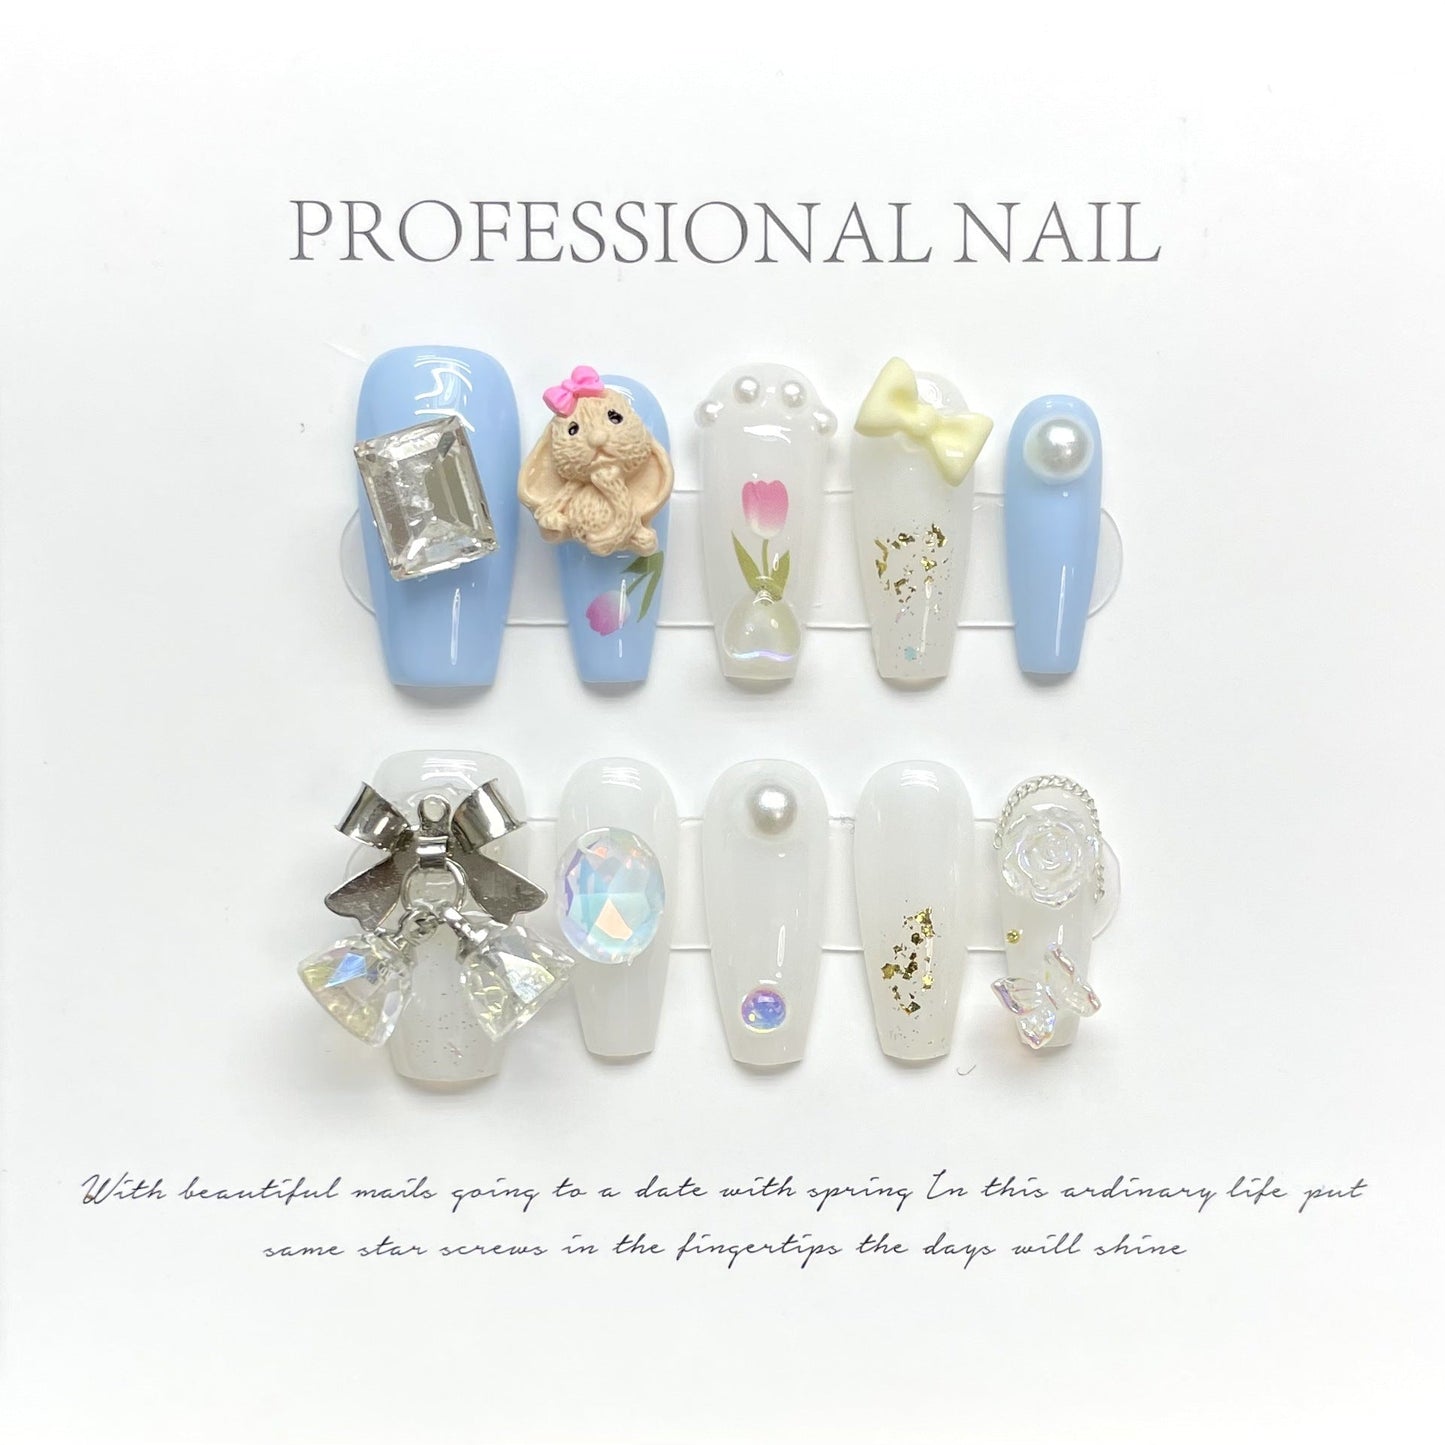 978 cartoon style press on nails 100% handmade false nails blue white